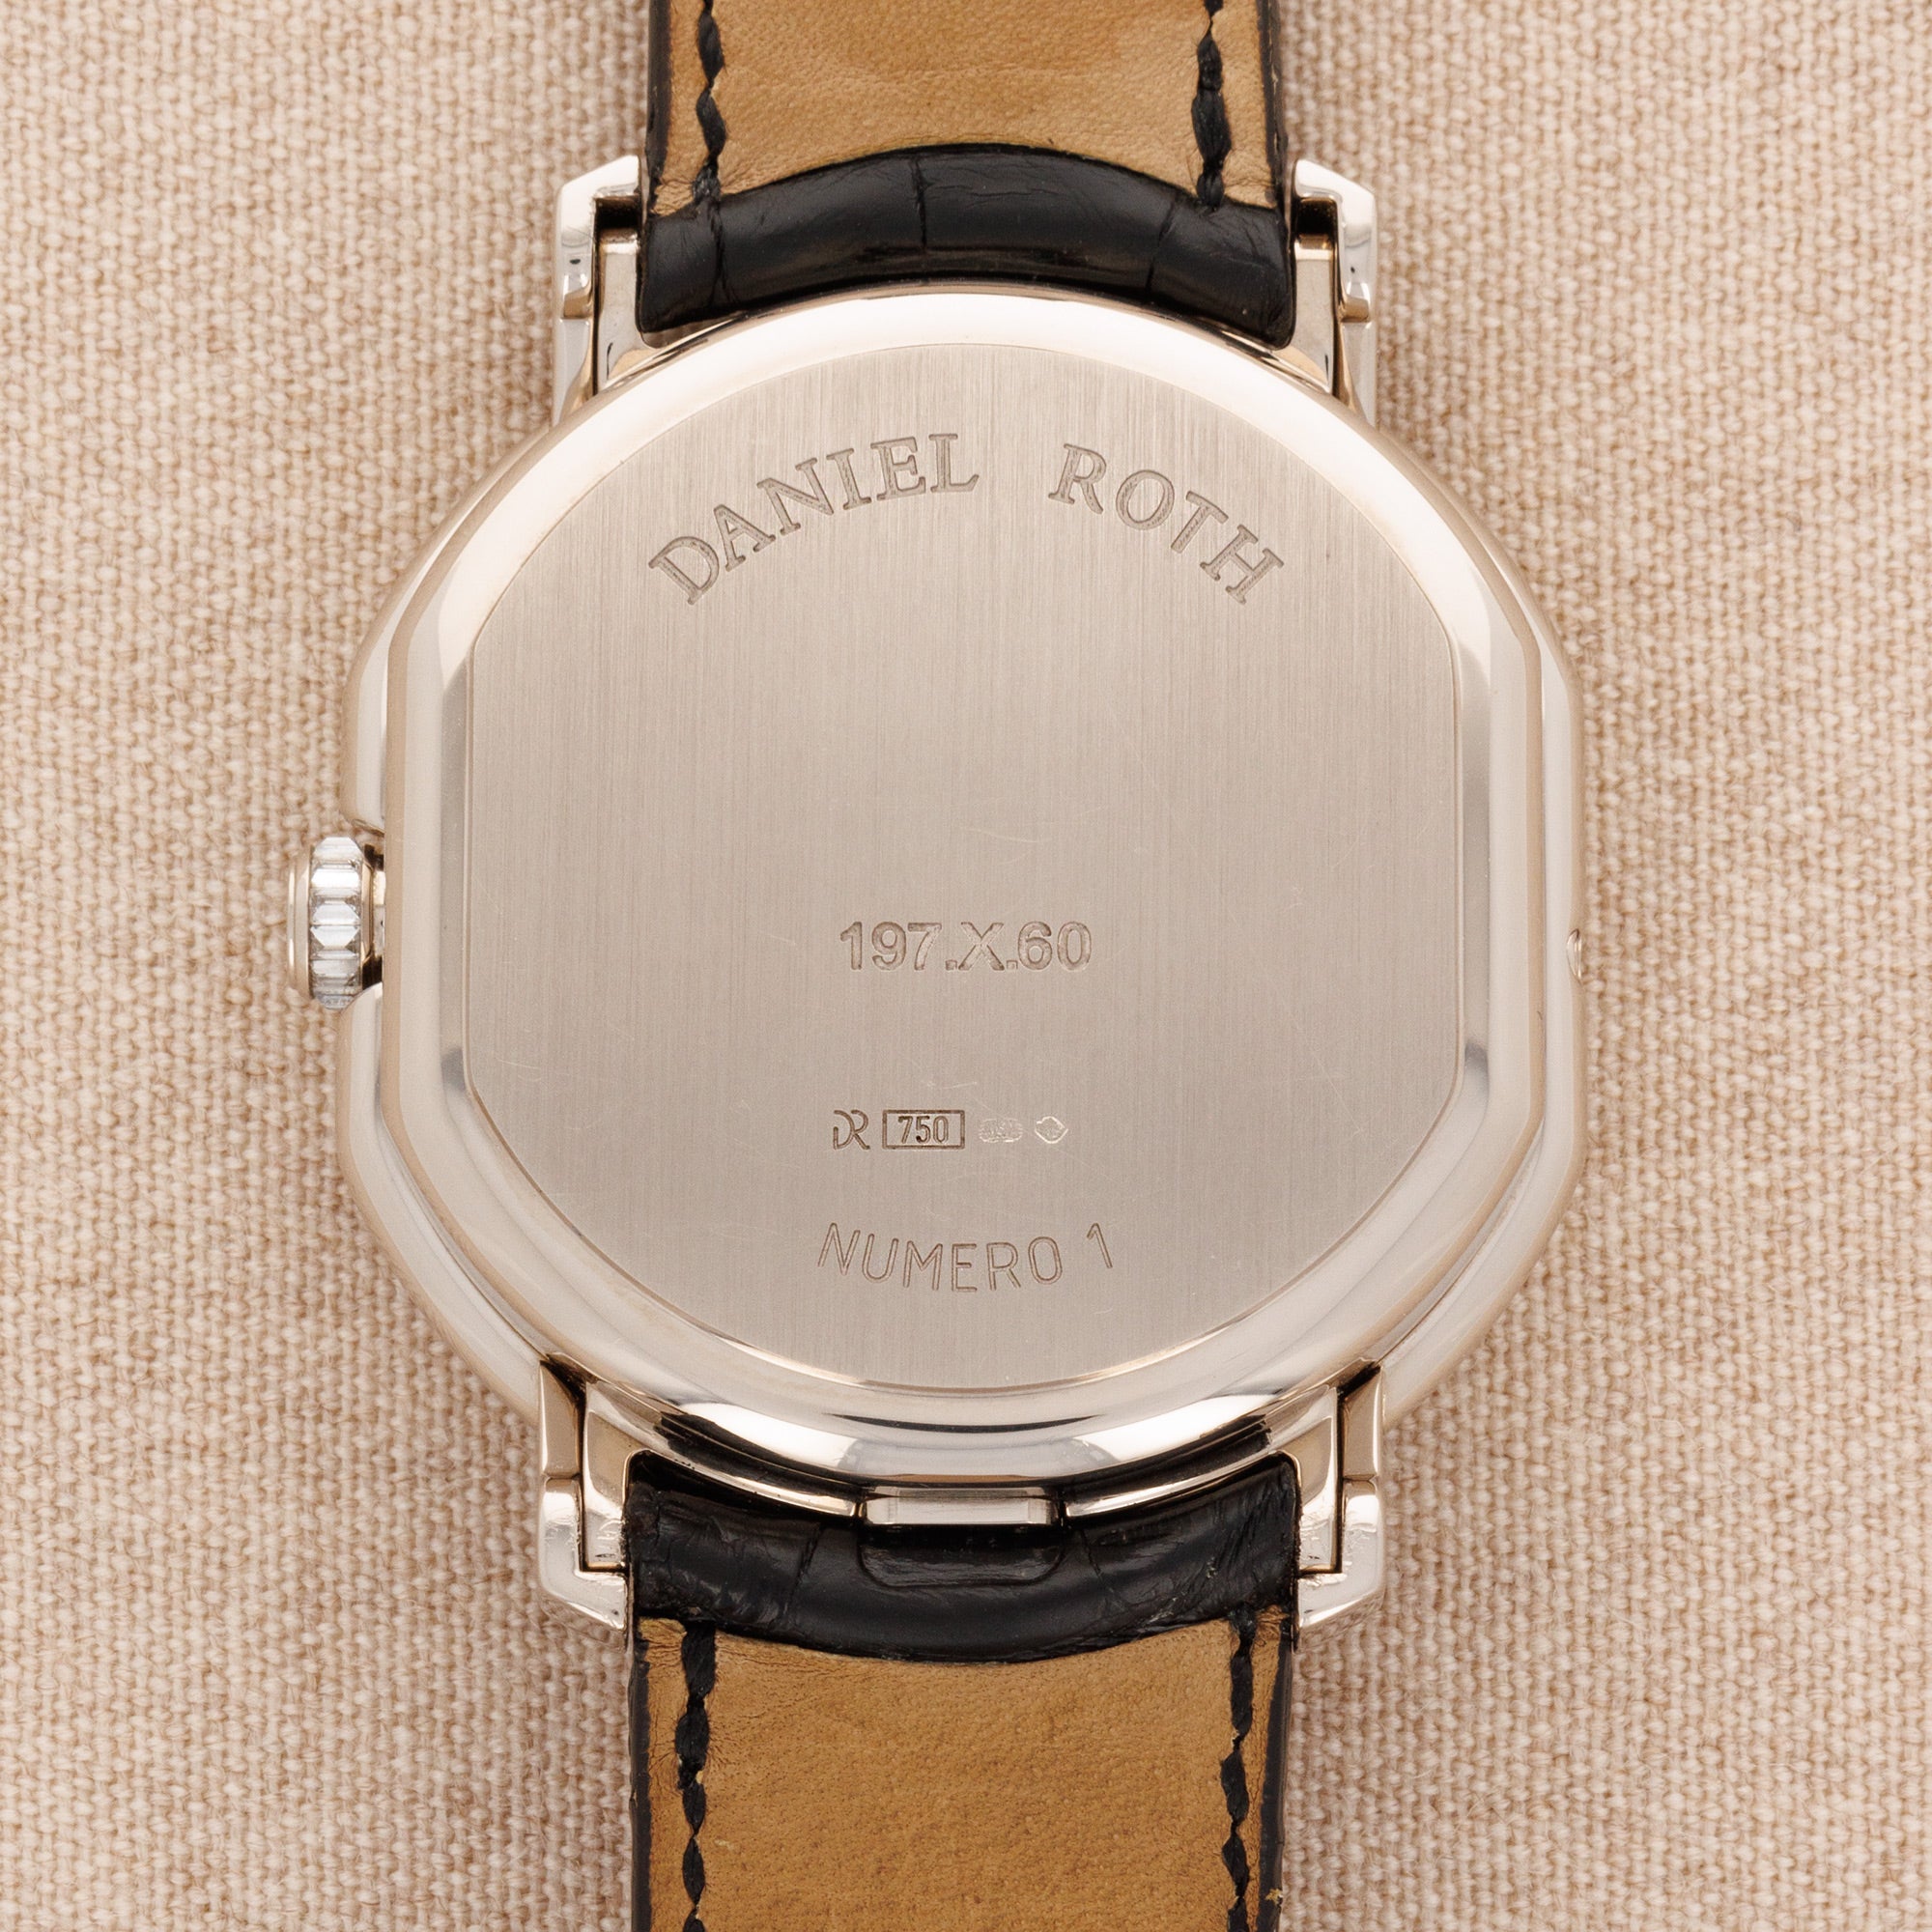 Daniel Roth - Daniel Roth 8-Day Double Face Tourbillon Diamond &amp; Sapphire Watch Ref. 197.x.60 - The Keystone Watches